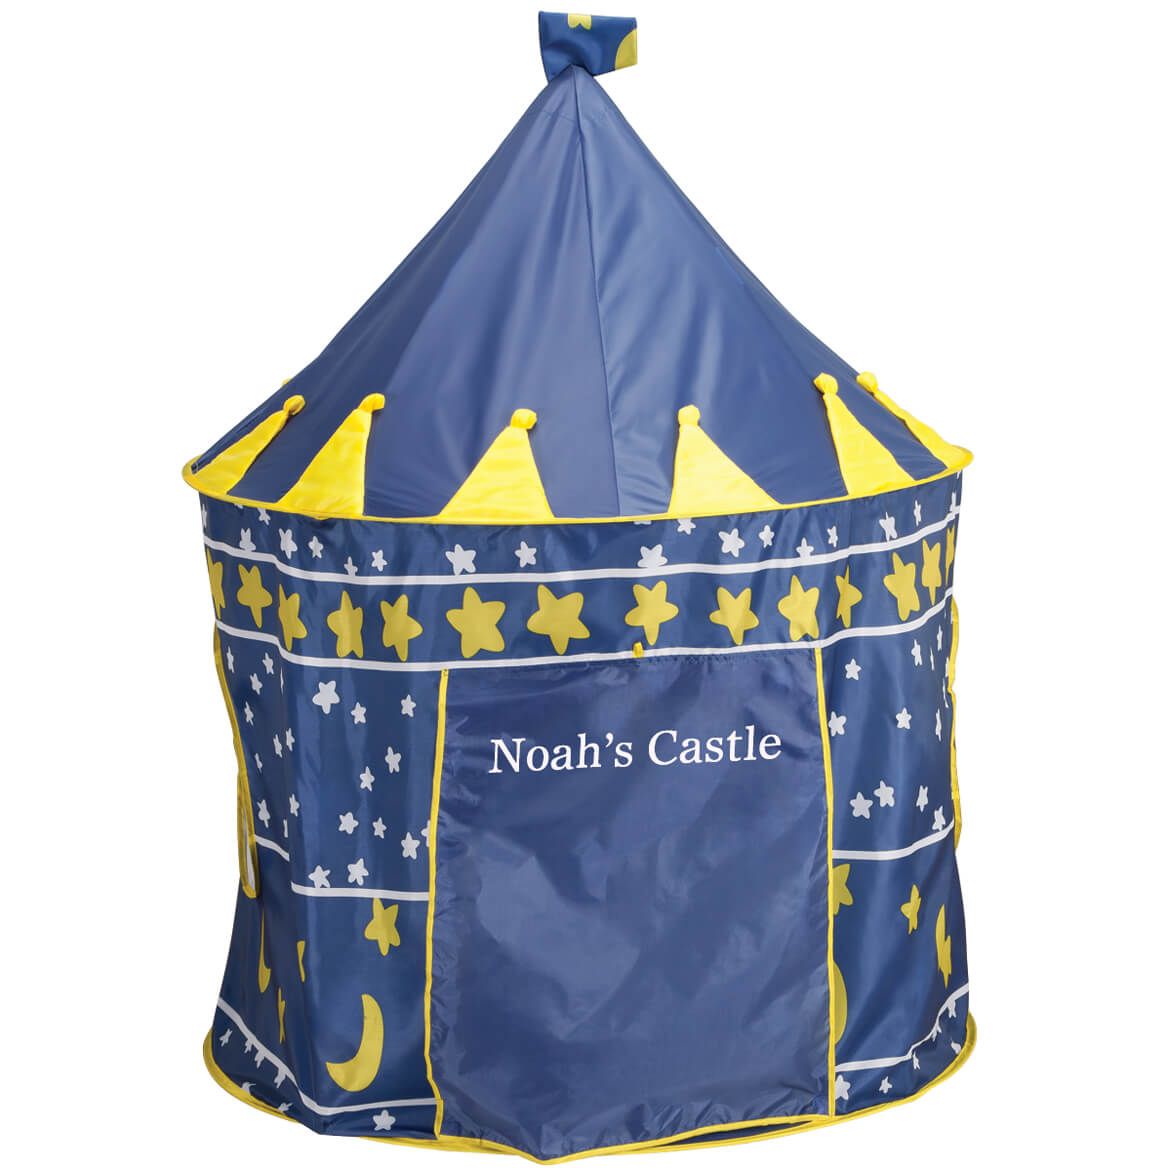 Personalized Children's Tent + '-' + 360092